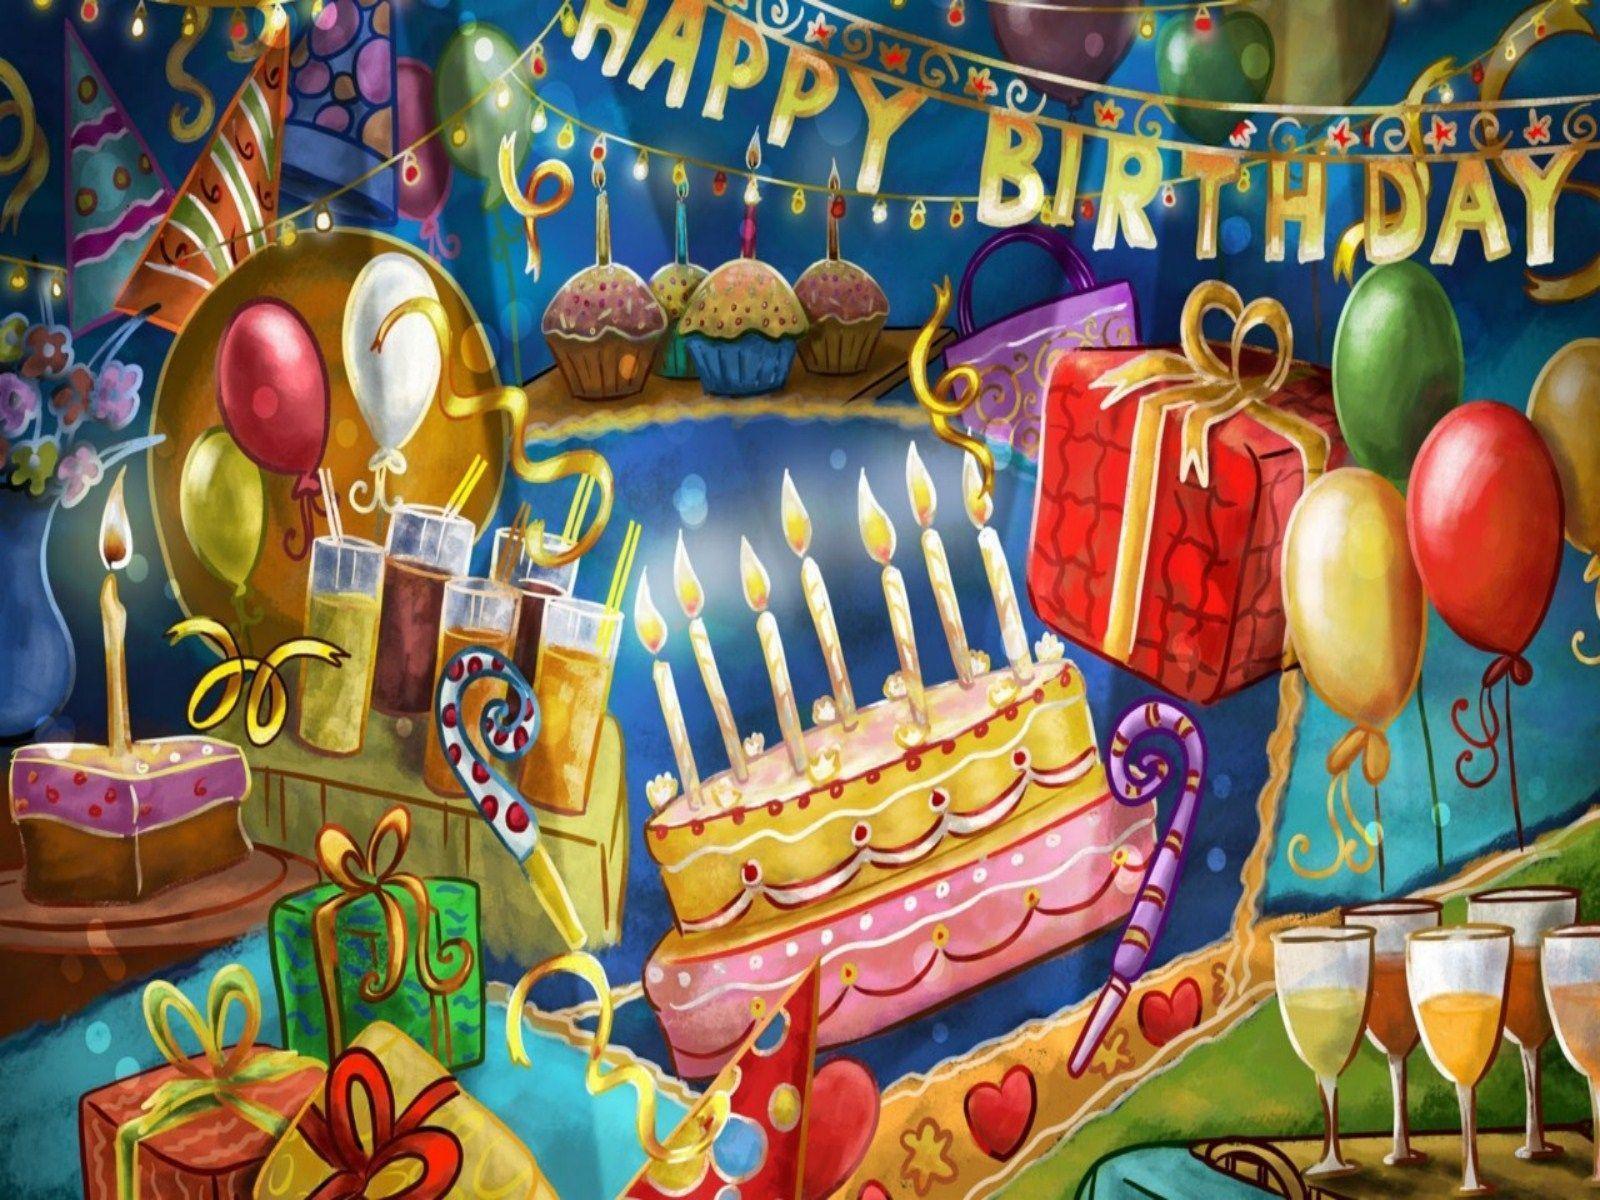 Happy Birthday Desktop Wallpaper 1600x1200 206029 Car Picture